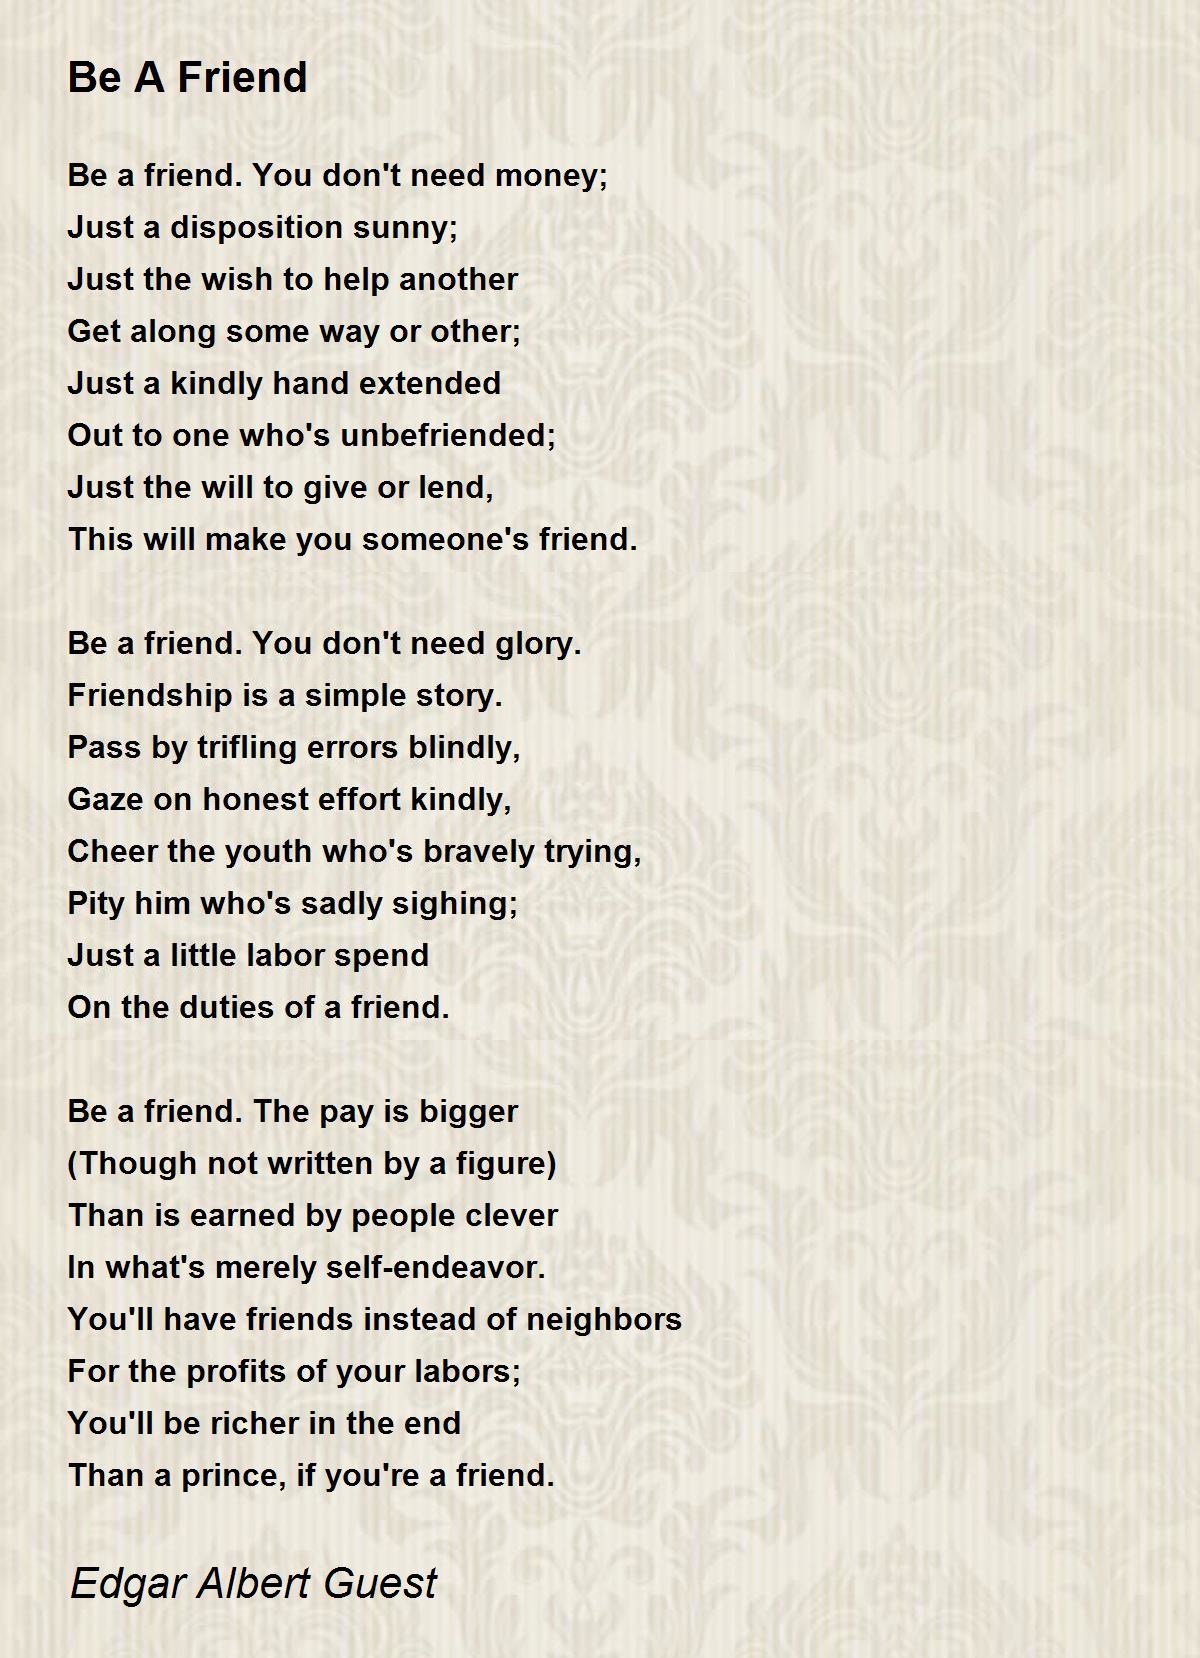 Be A Friend Poem by Edgar Albert Guest - Poem Hunter